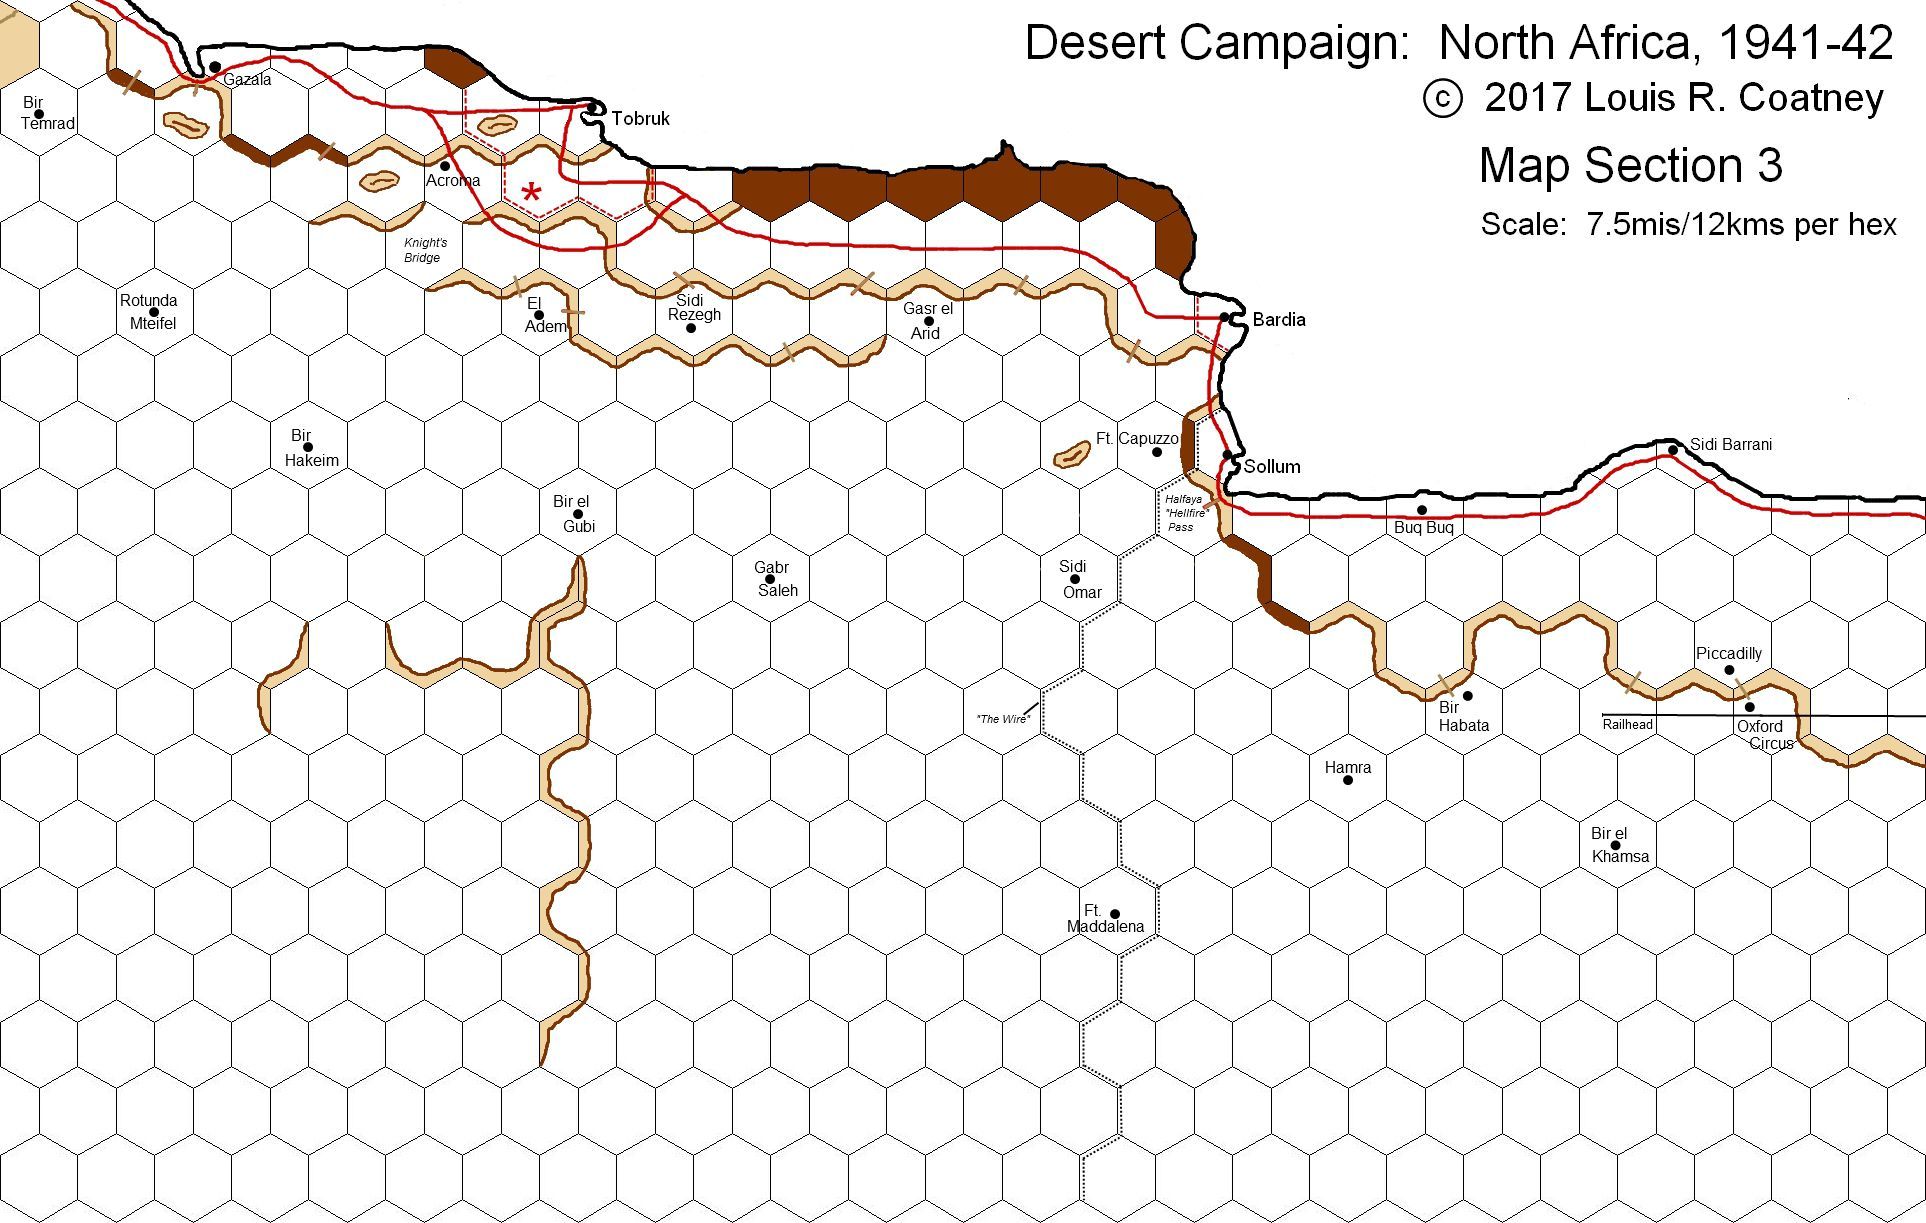 Desert Campaign:  North Africa 1941-42